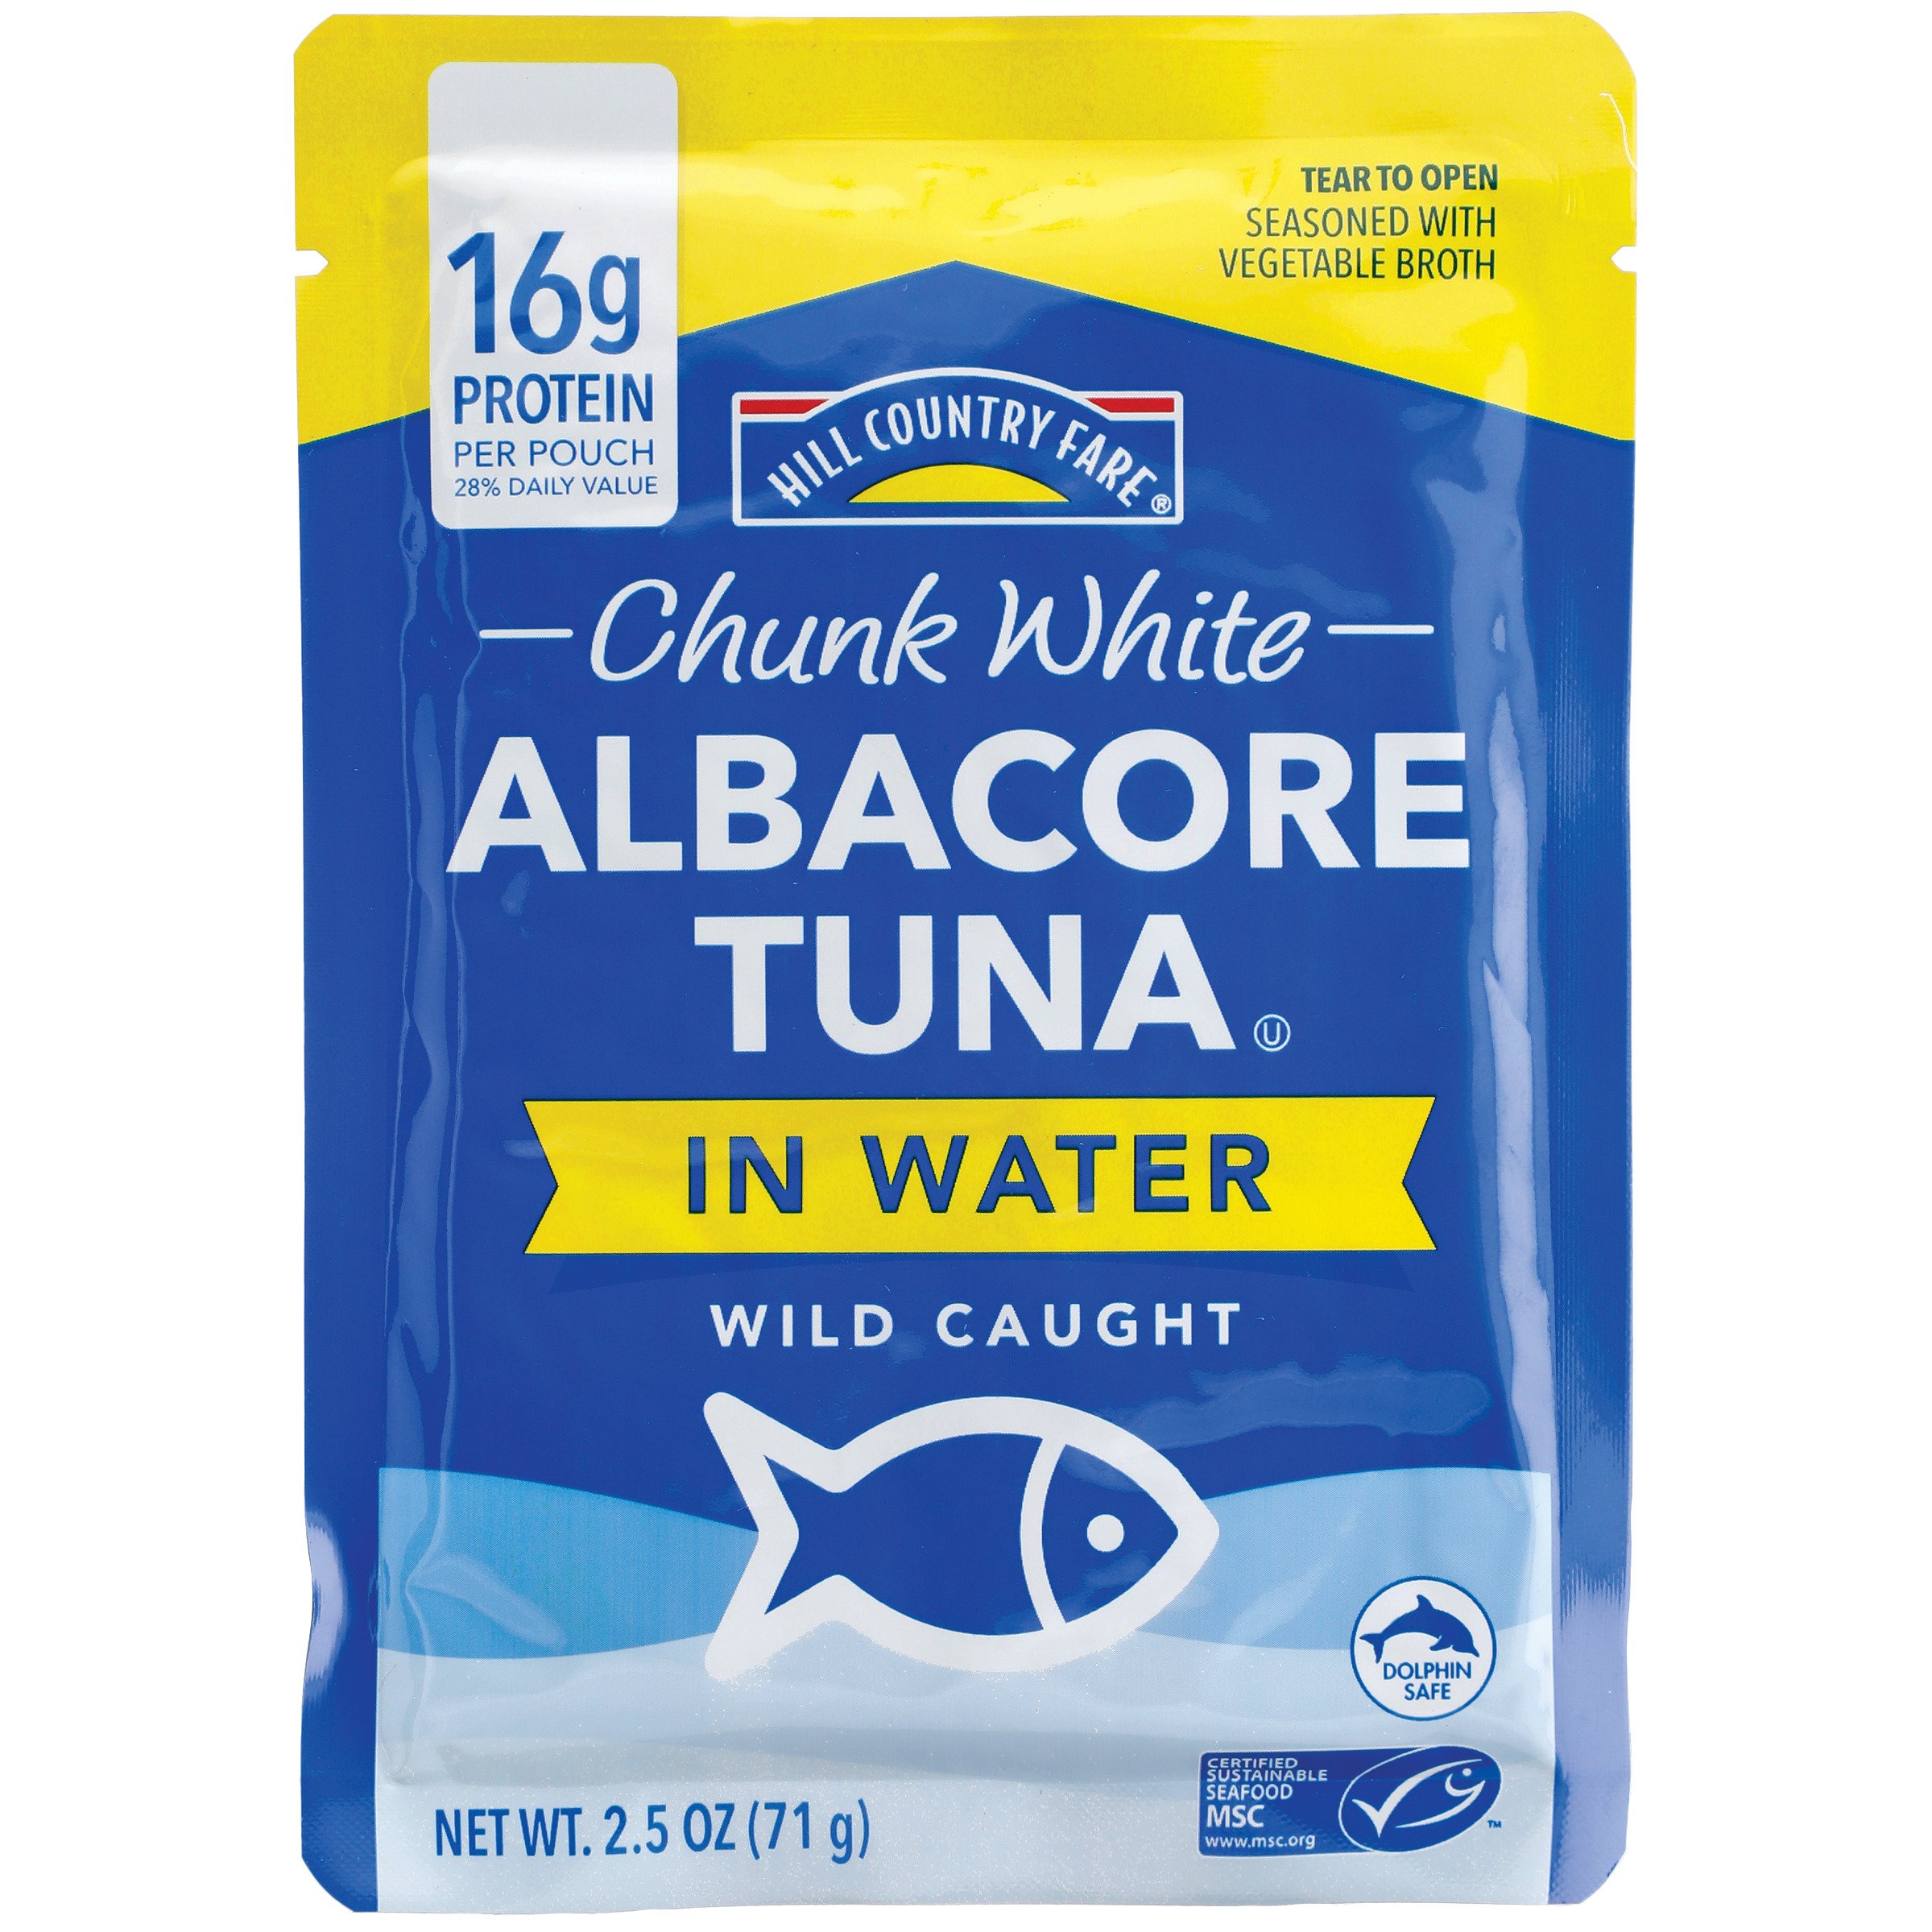 Chunk White Albacore Tuna in Water